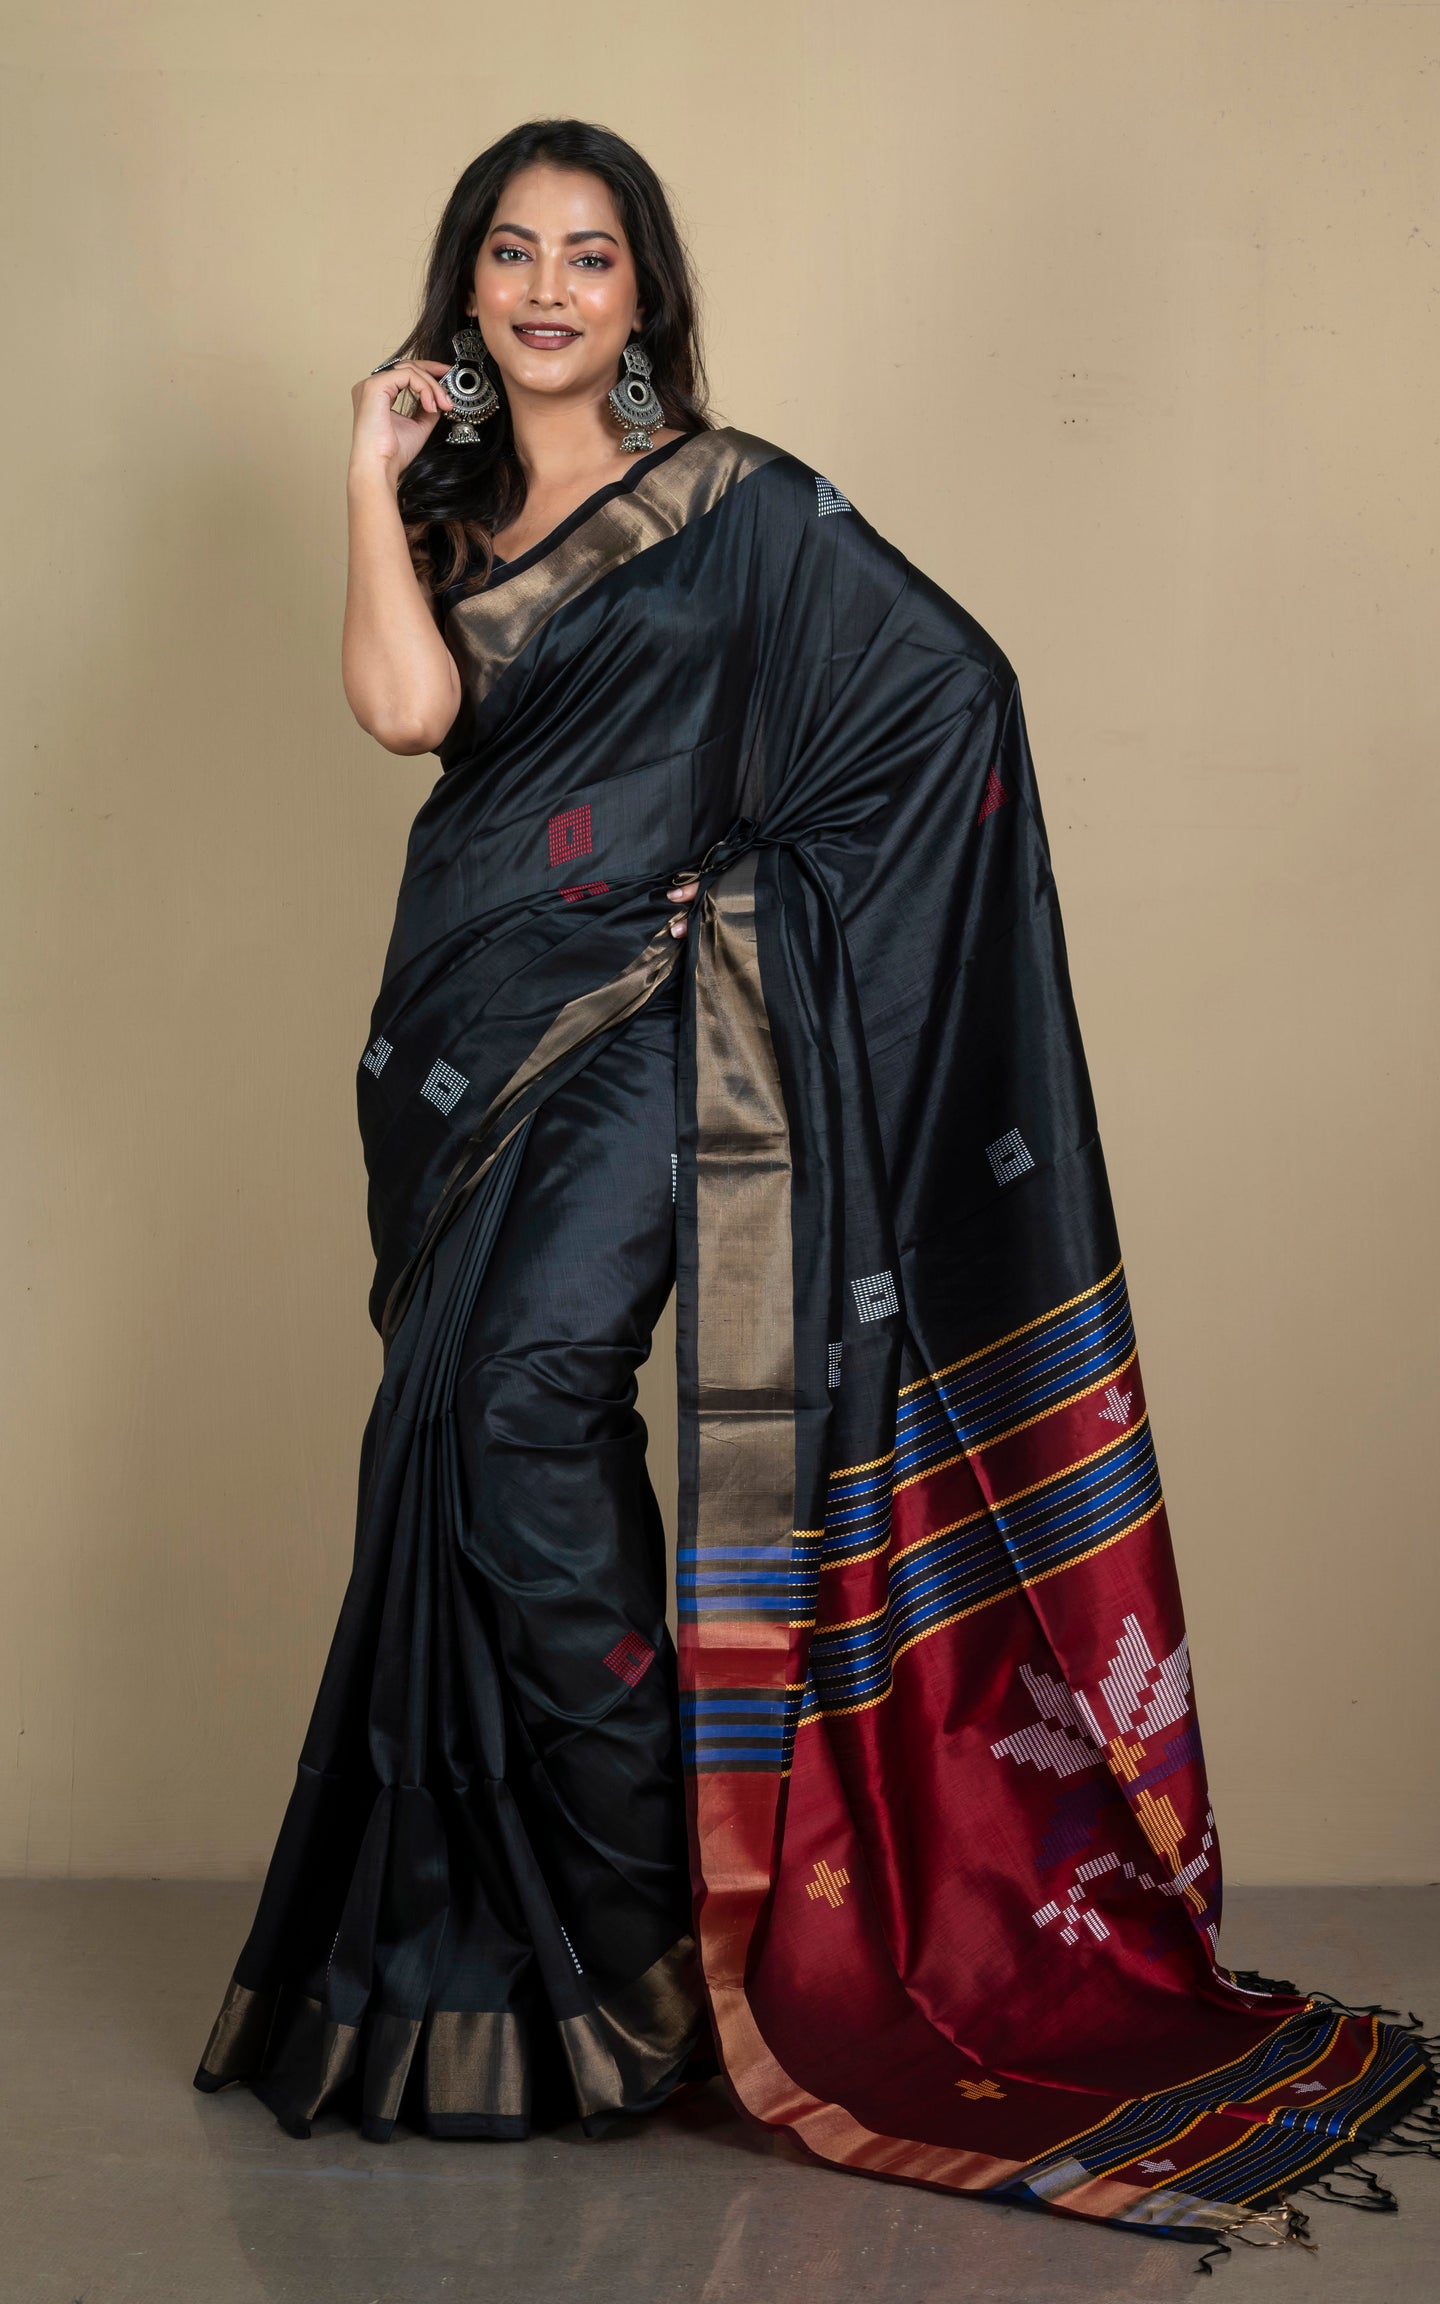 Handwoven Bishnupuri Kalakshetra Katan Silk Saree in Black, Dark Red, Blue and Off White